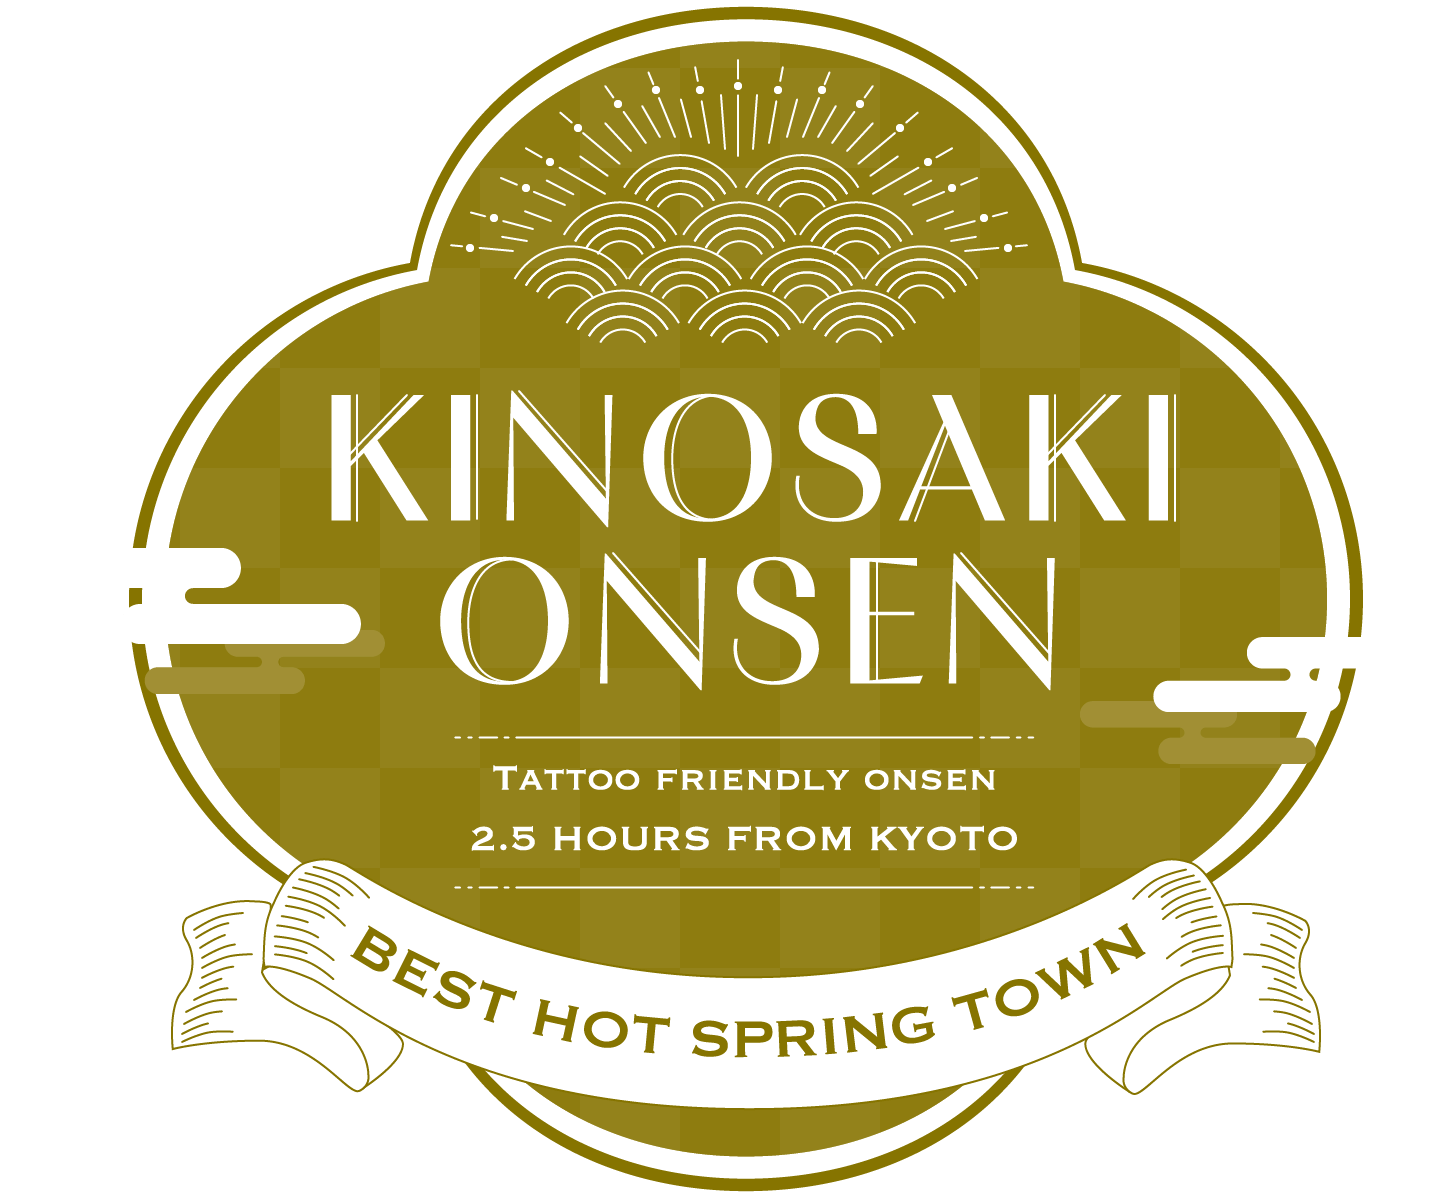 KINOSAKI ONSEN - BESR HOT SPRING TOWN